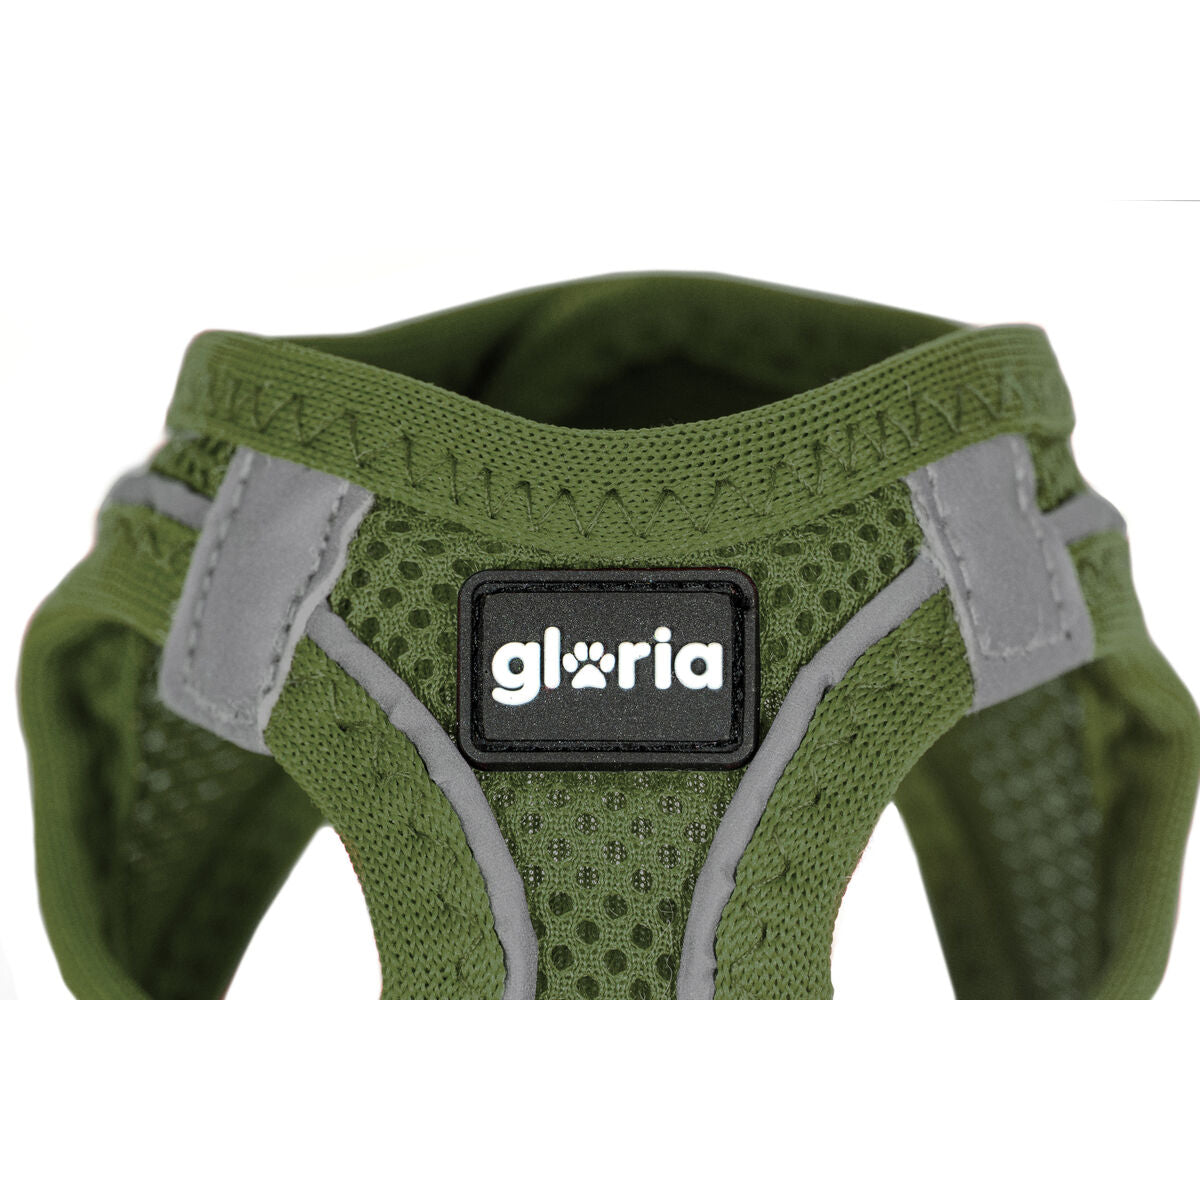 Dog Harness Gloria 41,4-43 cm Green S 29,4-32,6 cm